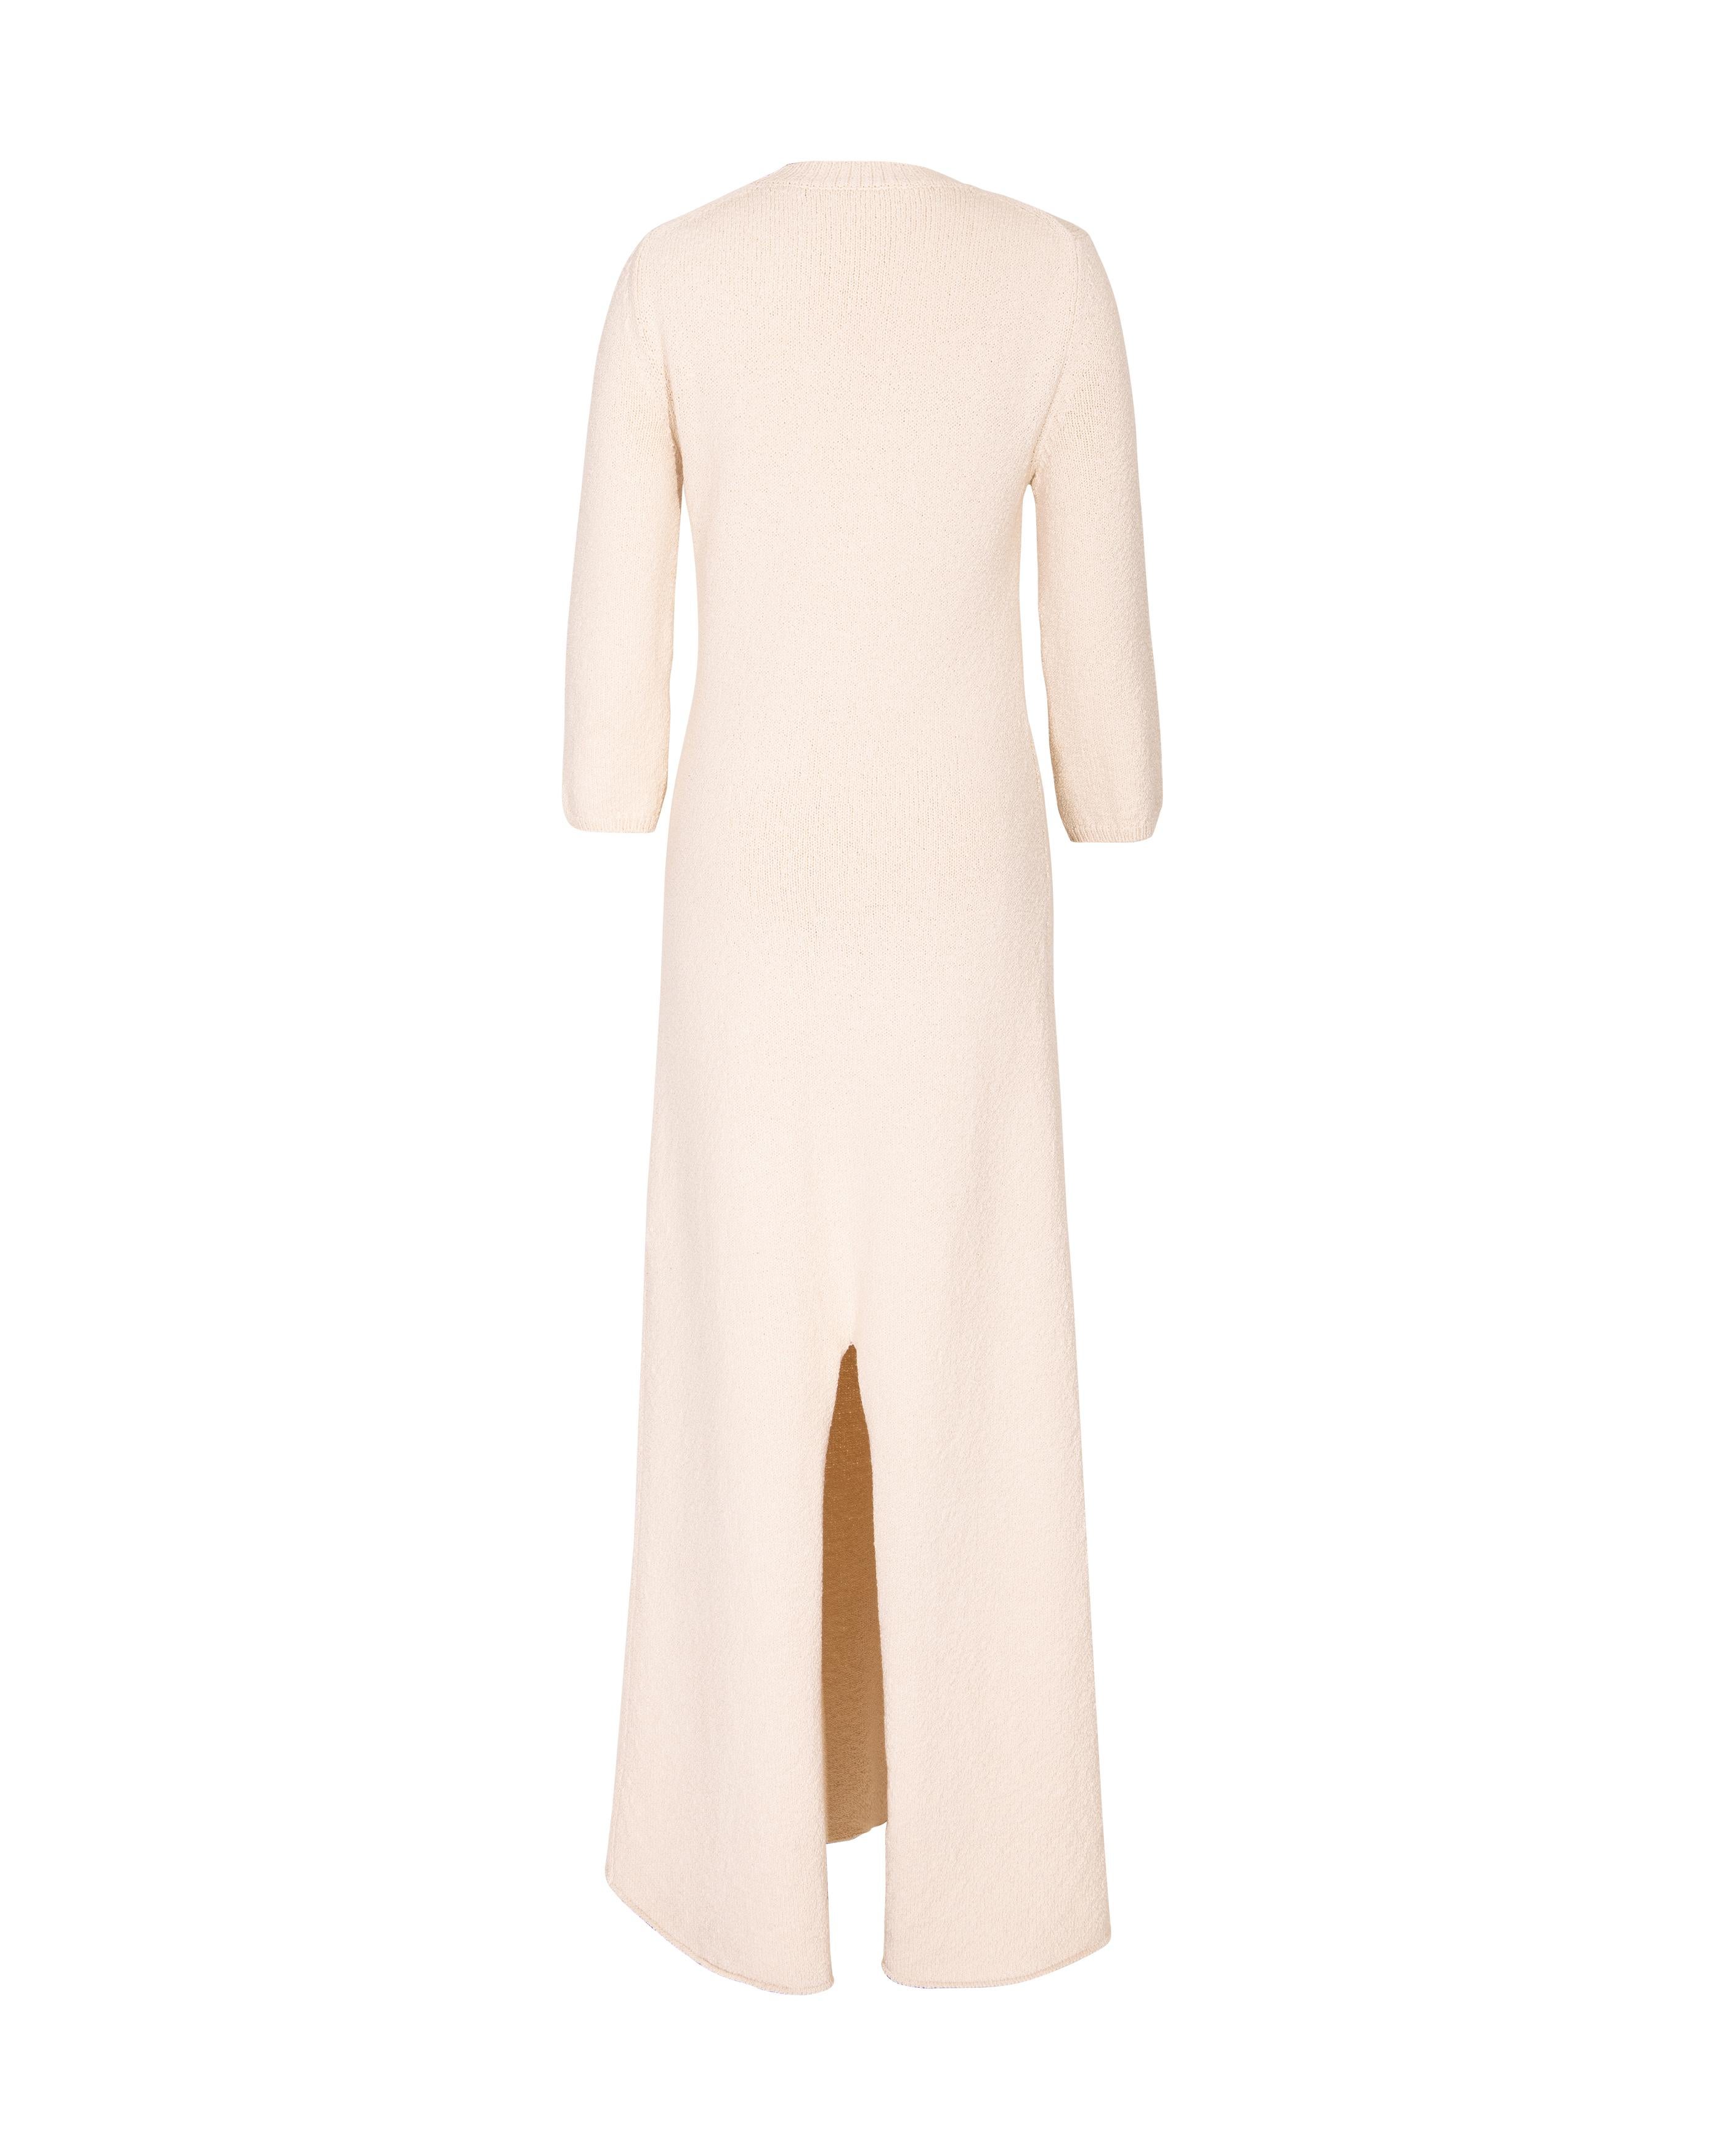 Women's Resort 2015 Céline by Phoebe Philo Scoop Neck Cream Knit Dress